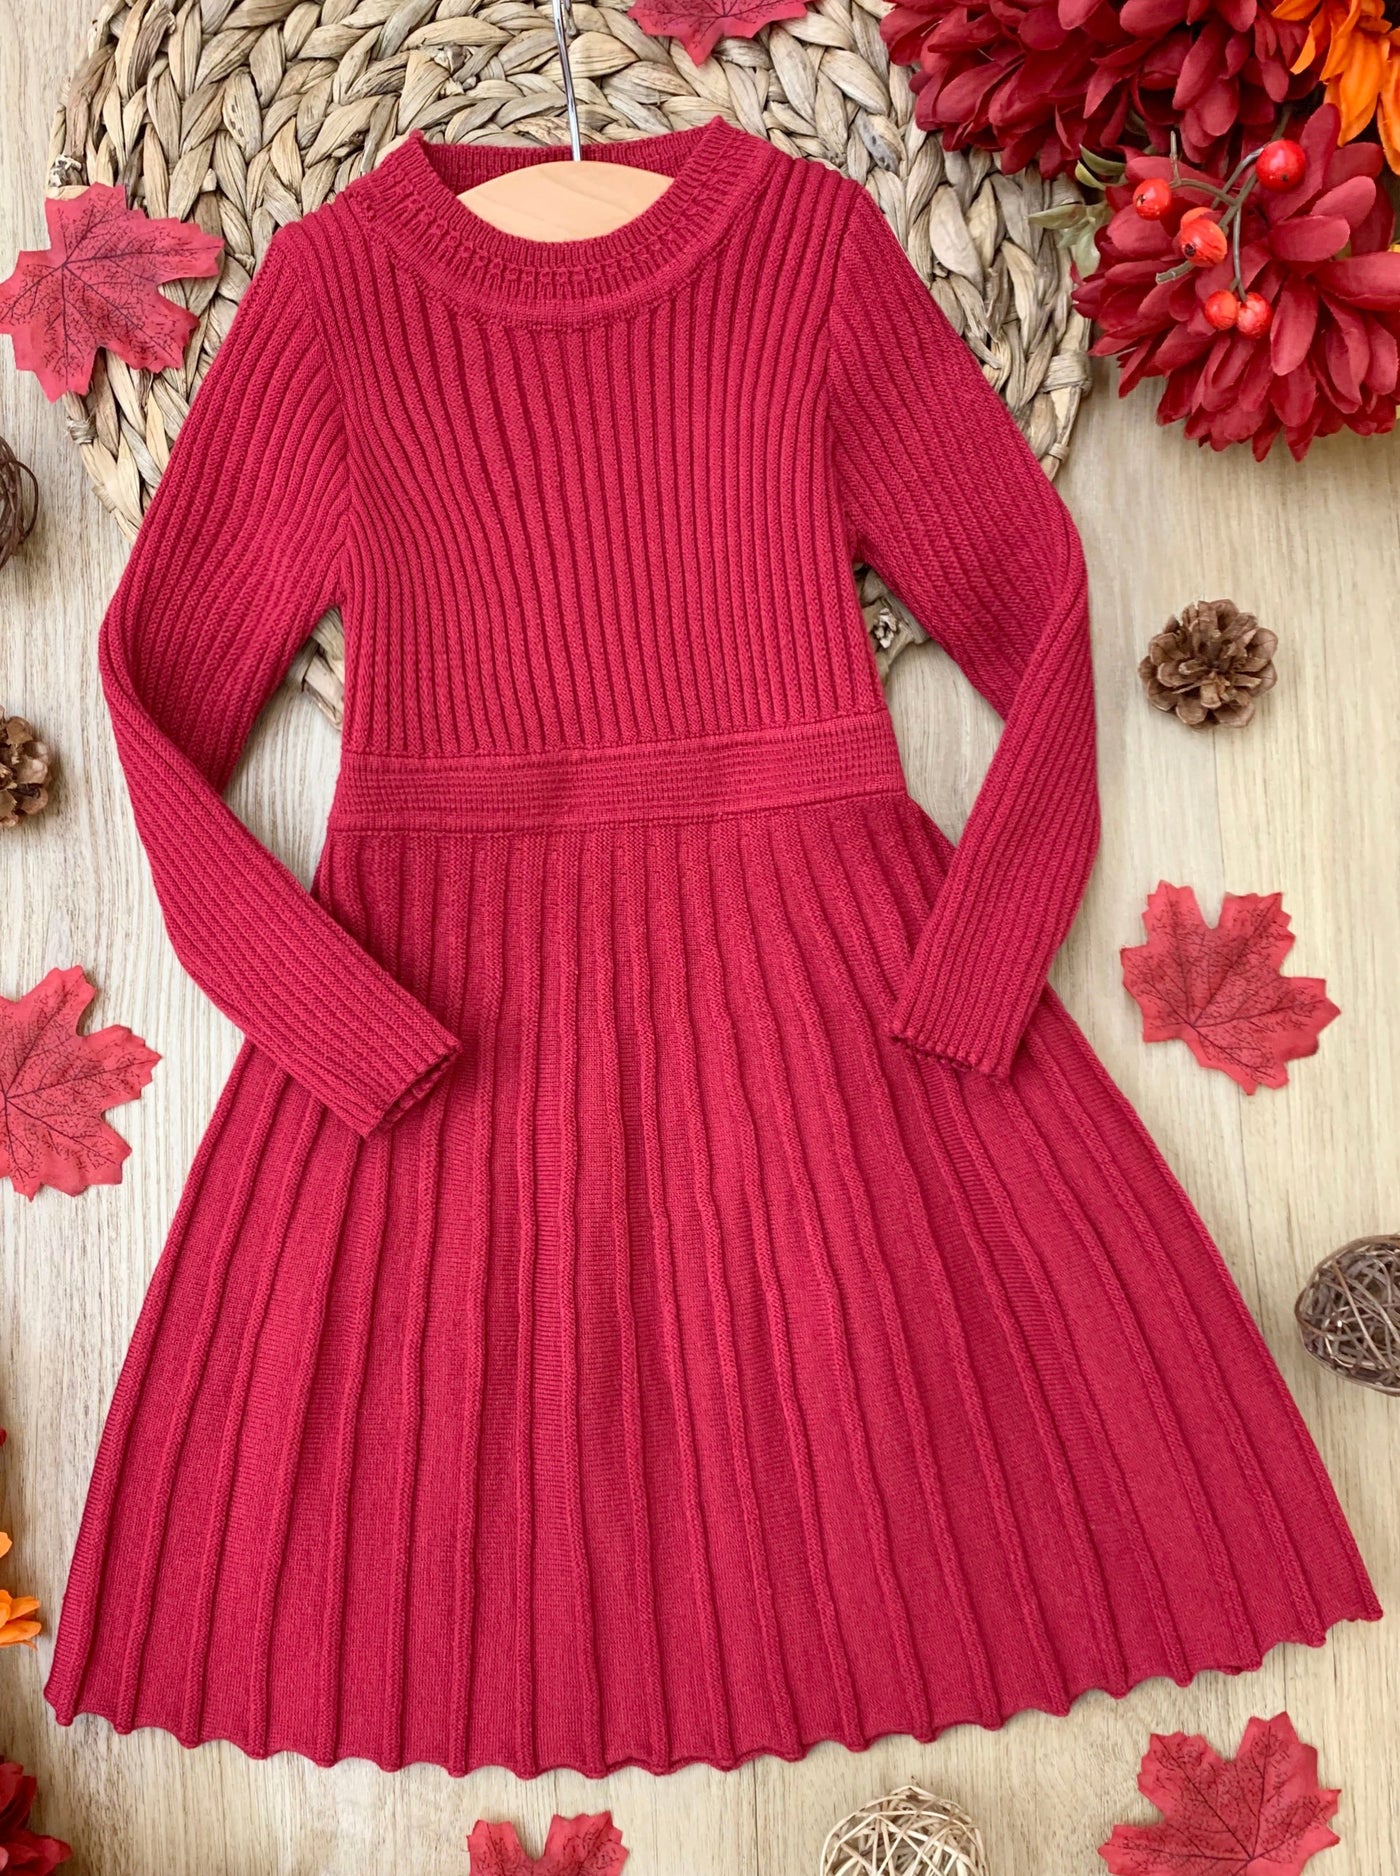 Girls Preppy Chic Dresses | Rib Knit Sweater Dress | Mia Belle Girls